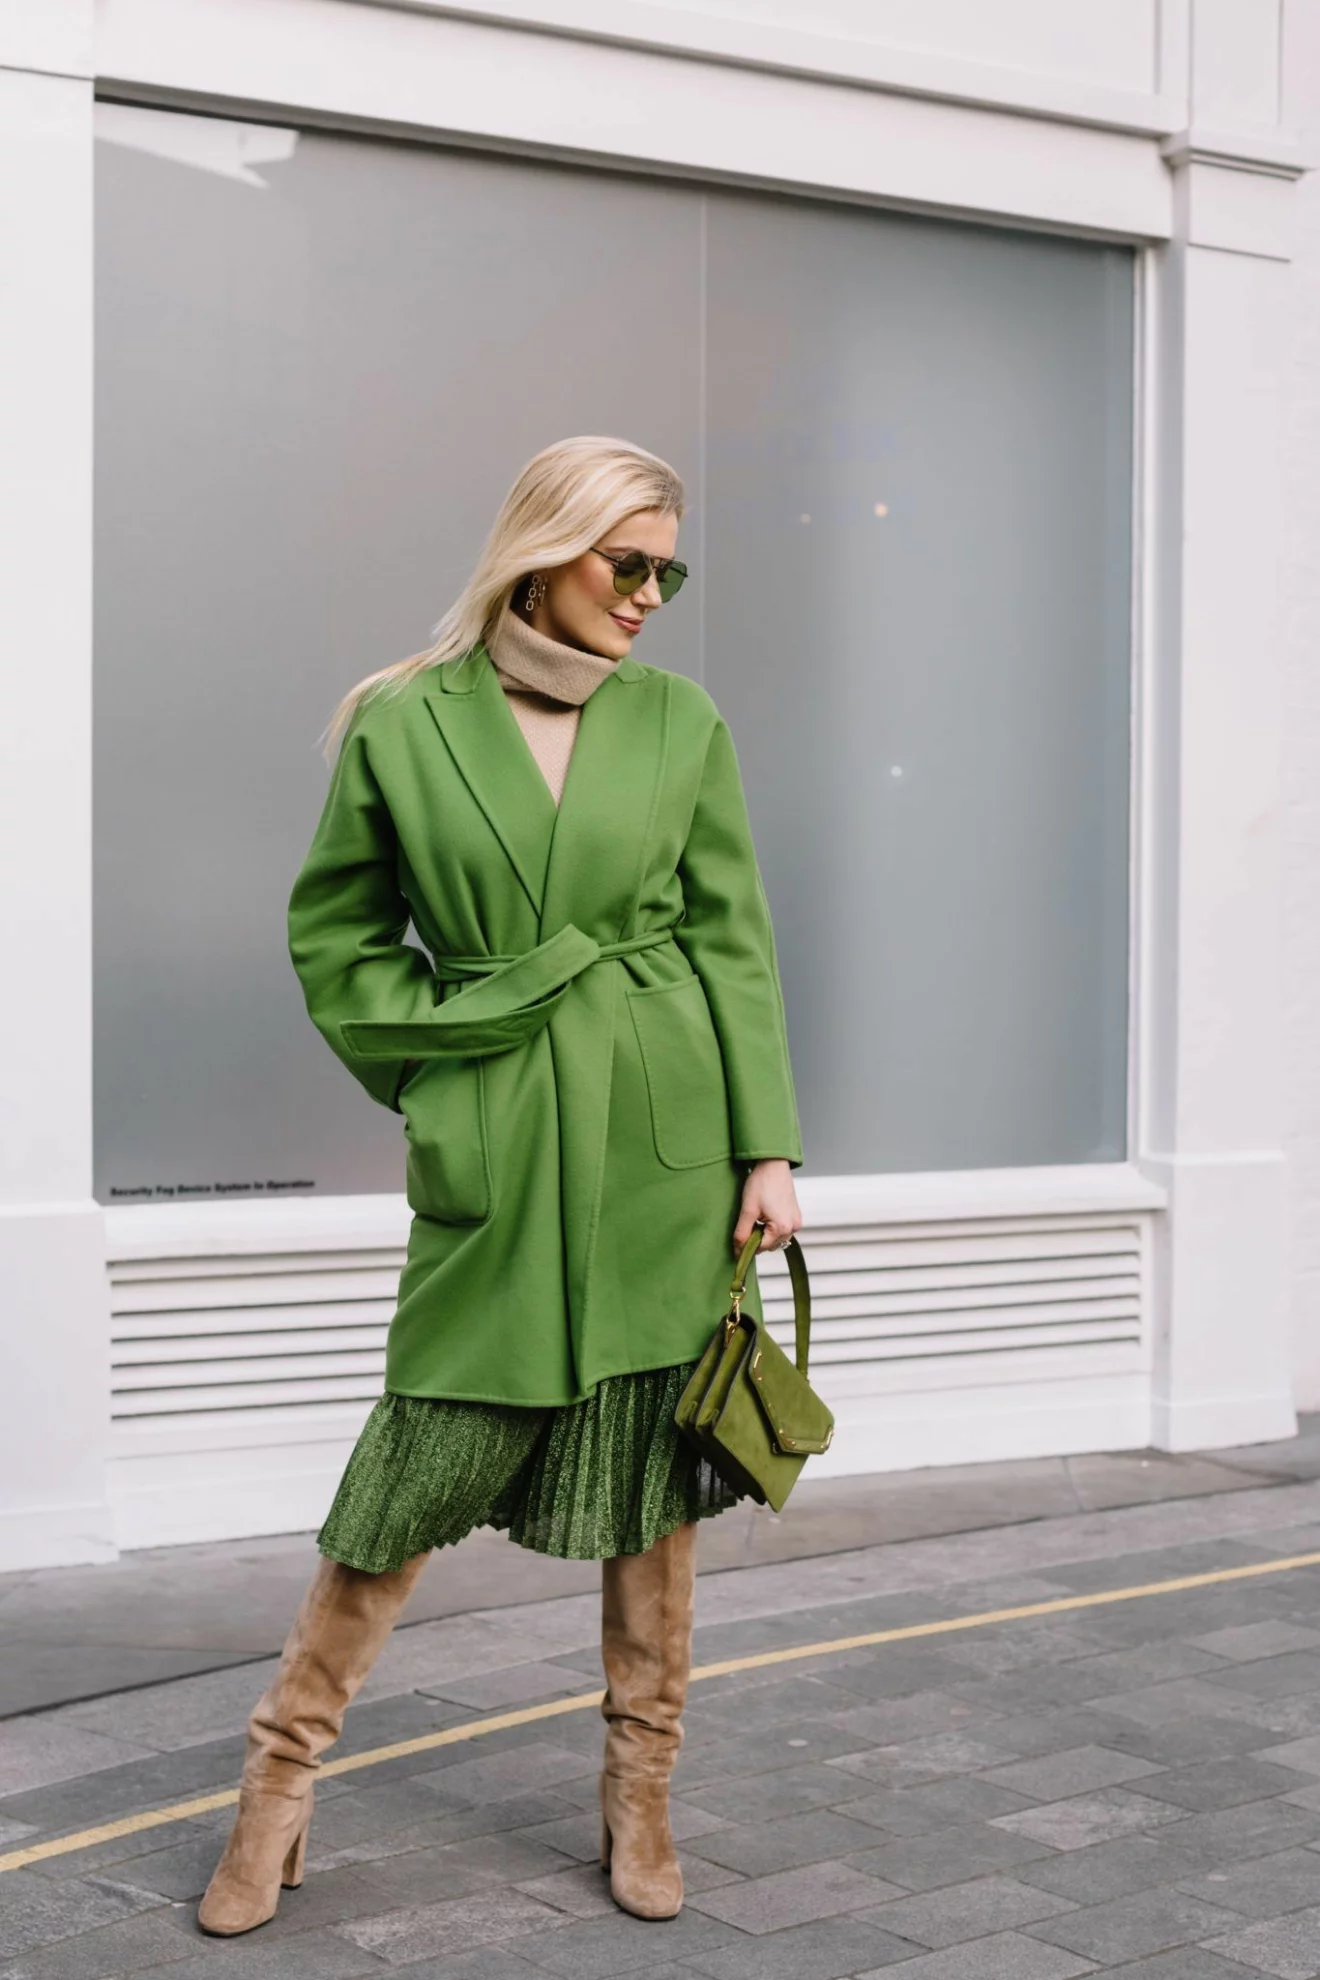 Streetstyle från London Fashion week, grön look.